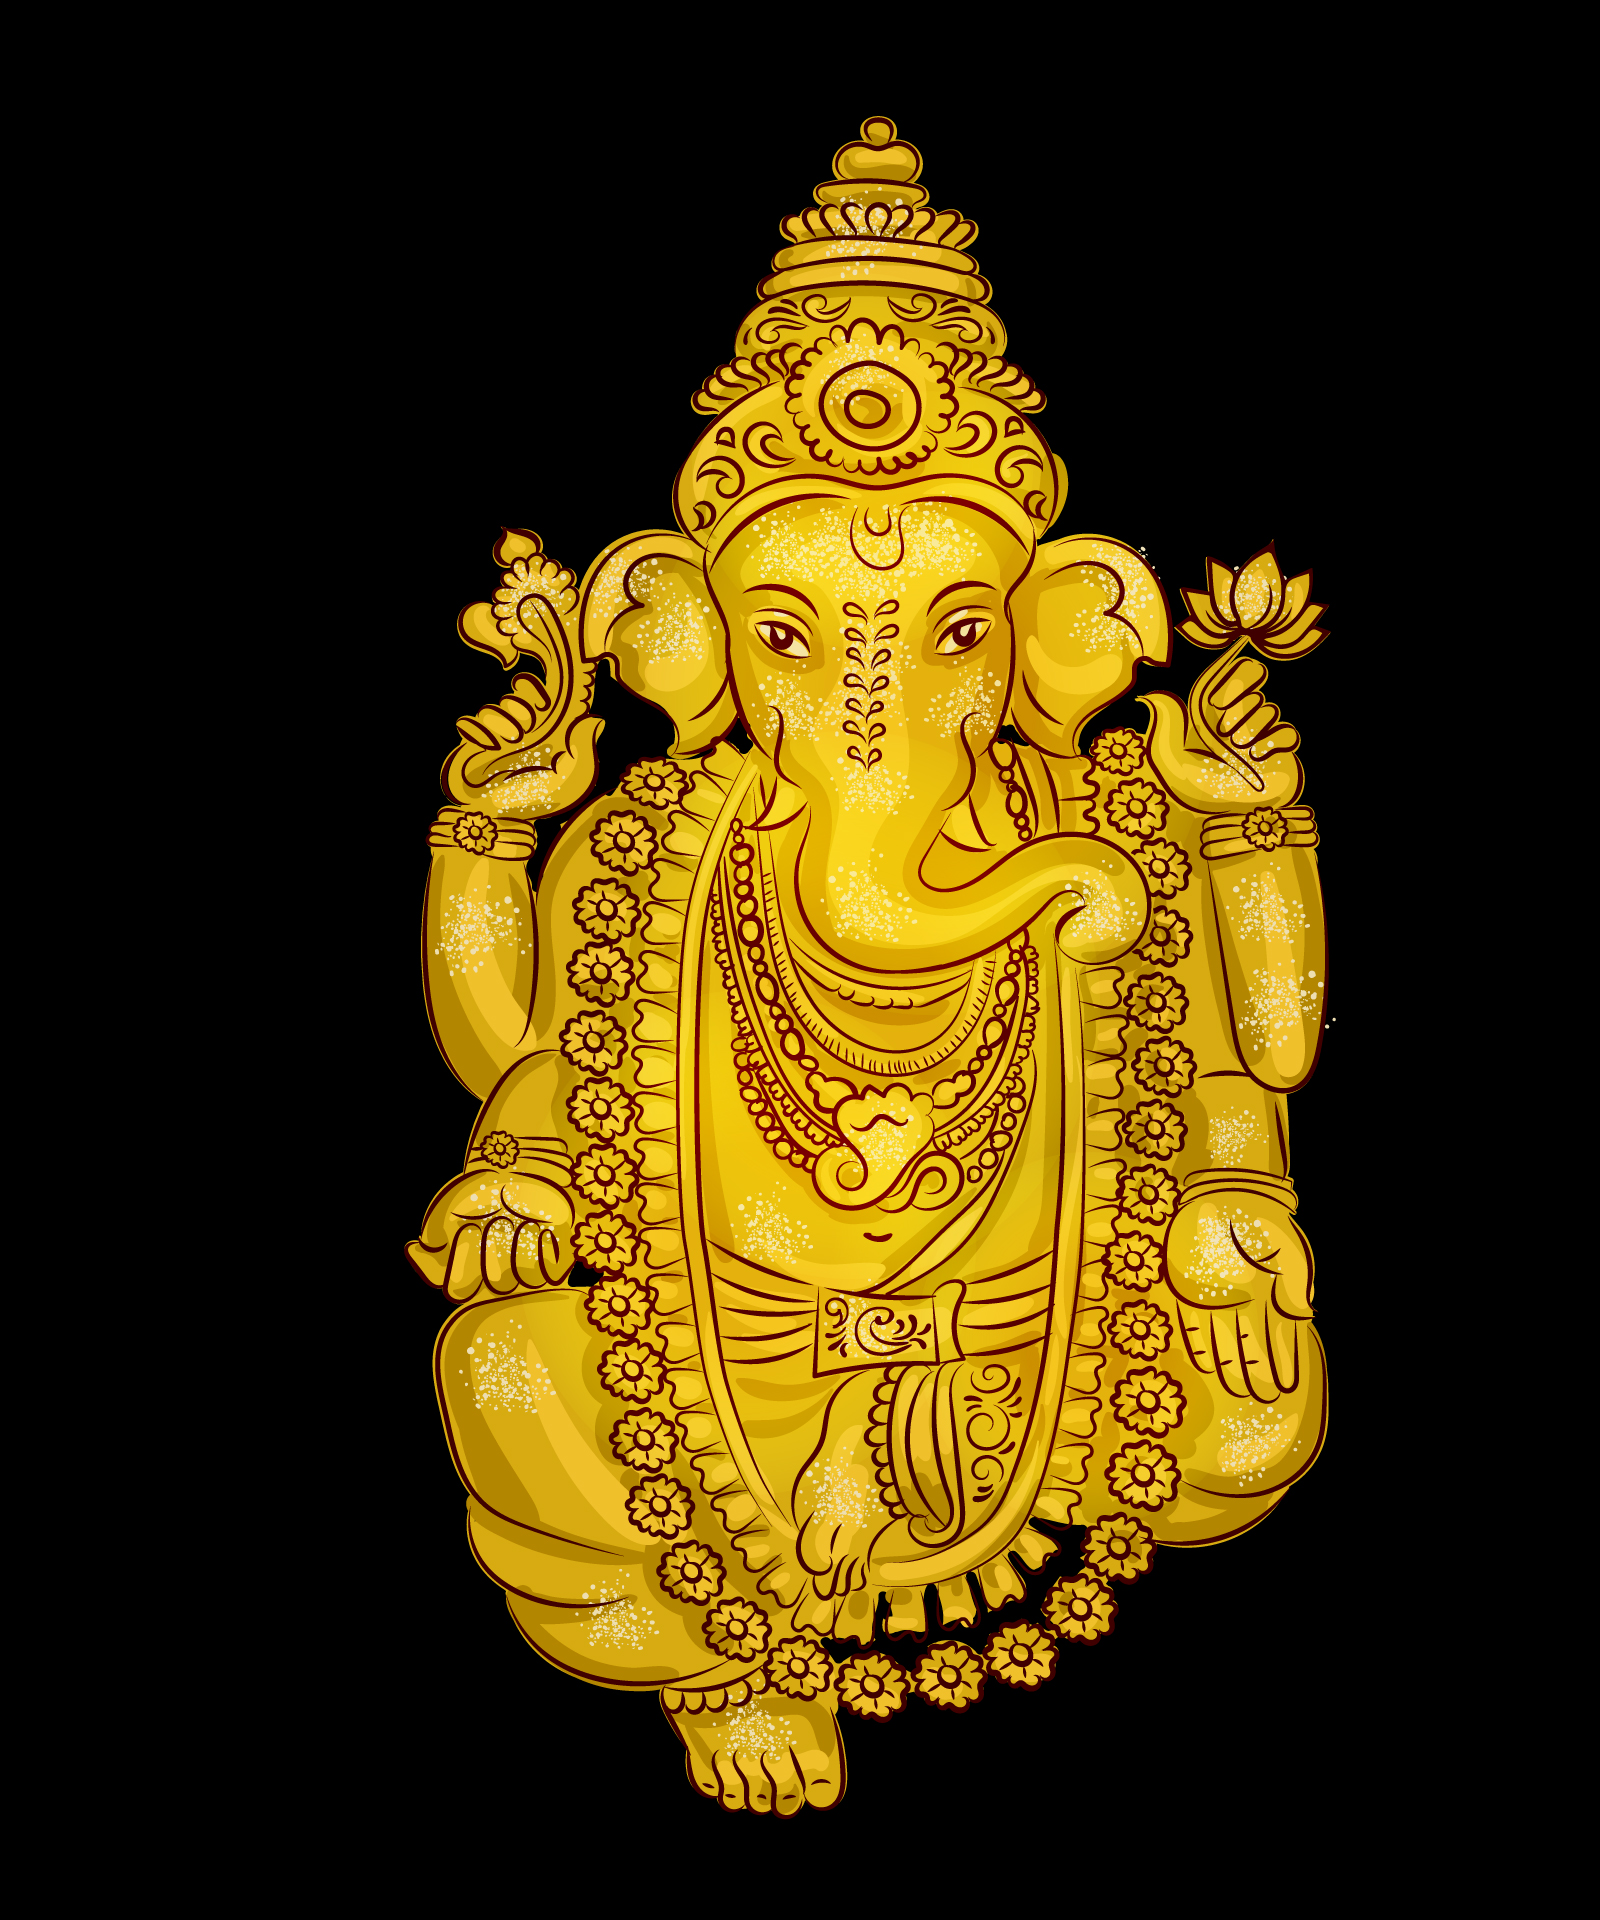 Indian Buddhism elephant god pattern Illustrations Vectors AI ESP Free Downlaod